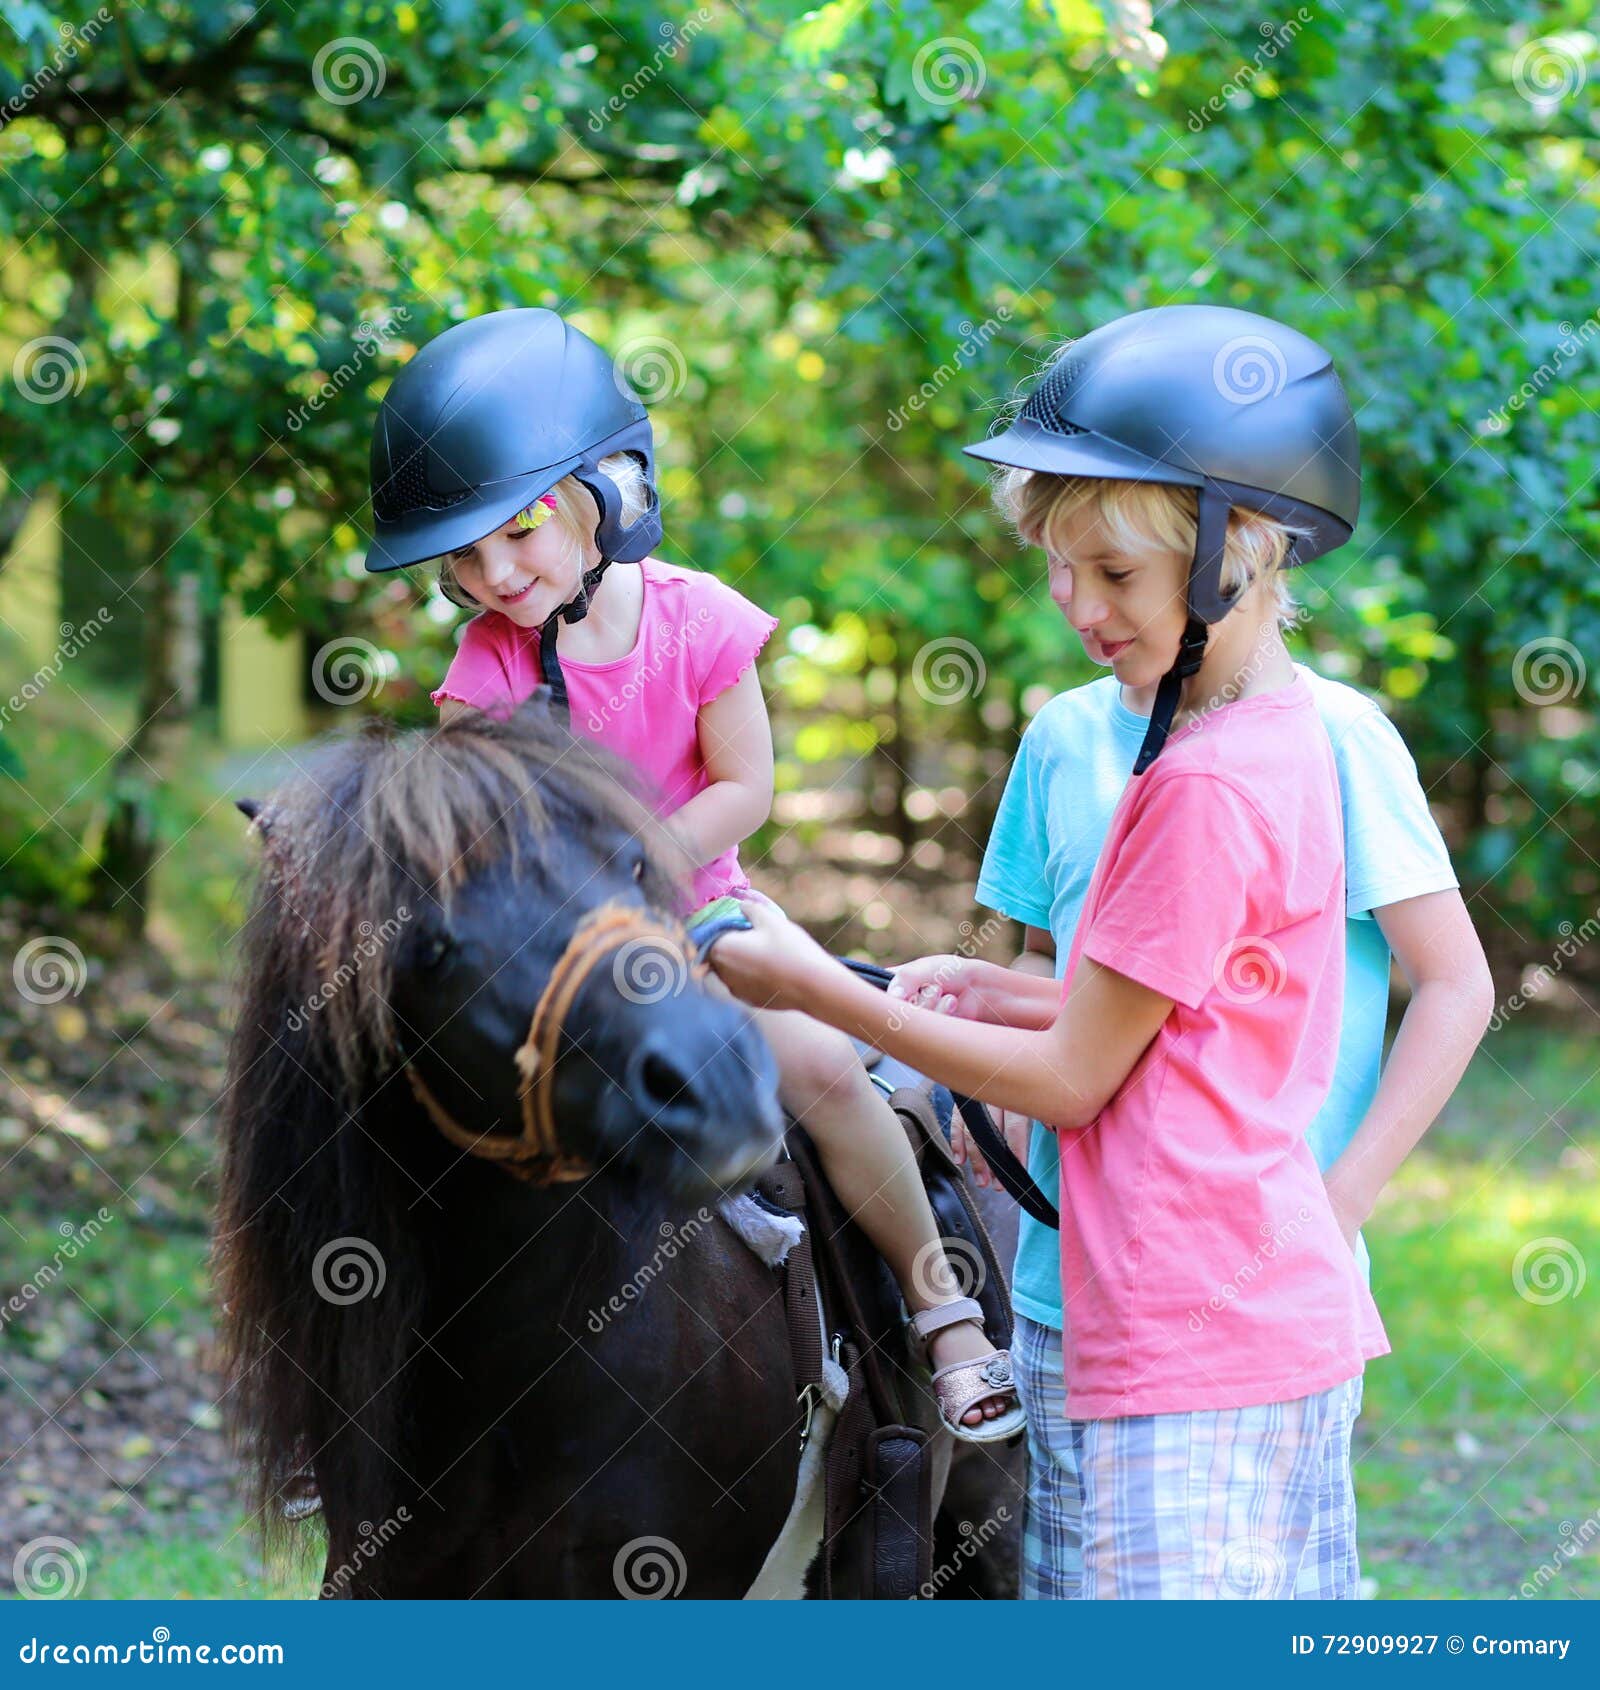 kids having fun at horse riding summer camp